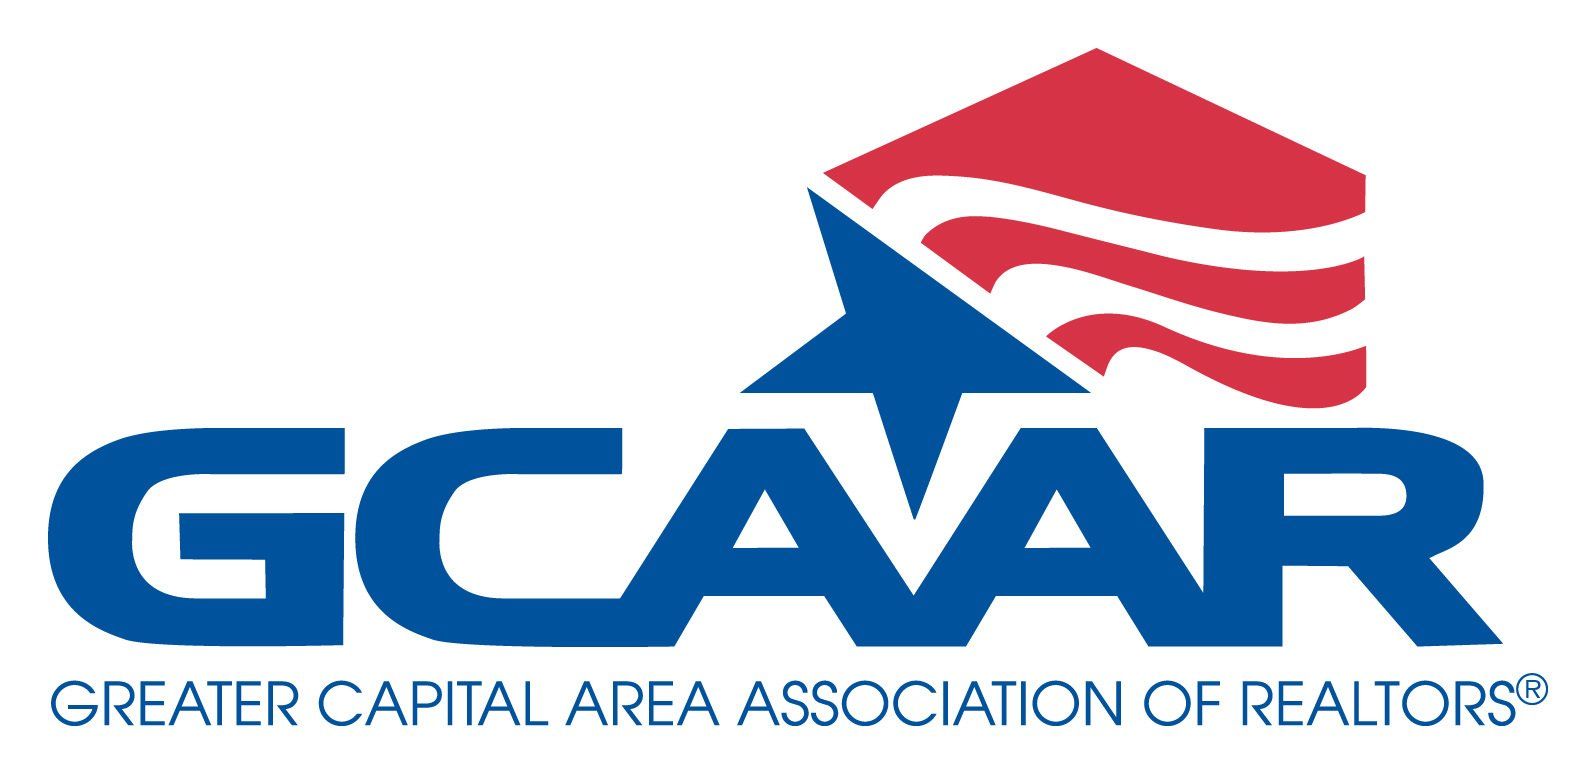 Greater Capital Area Association of Realtors